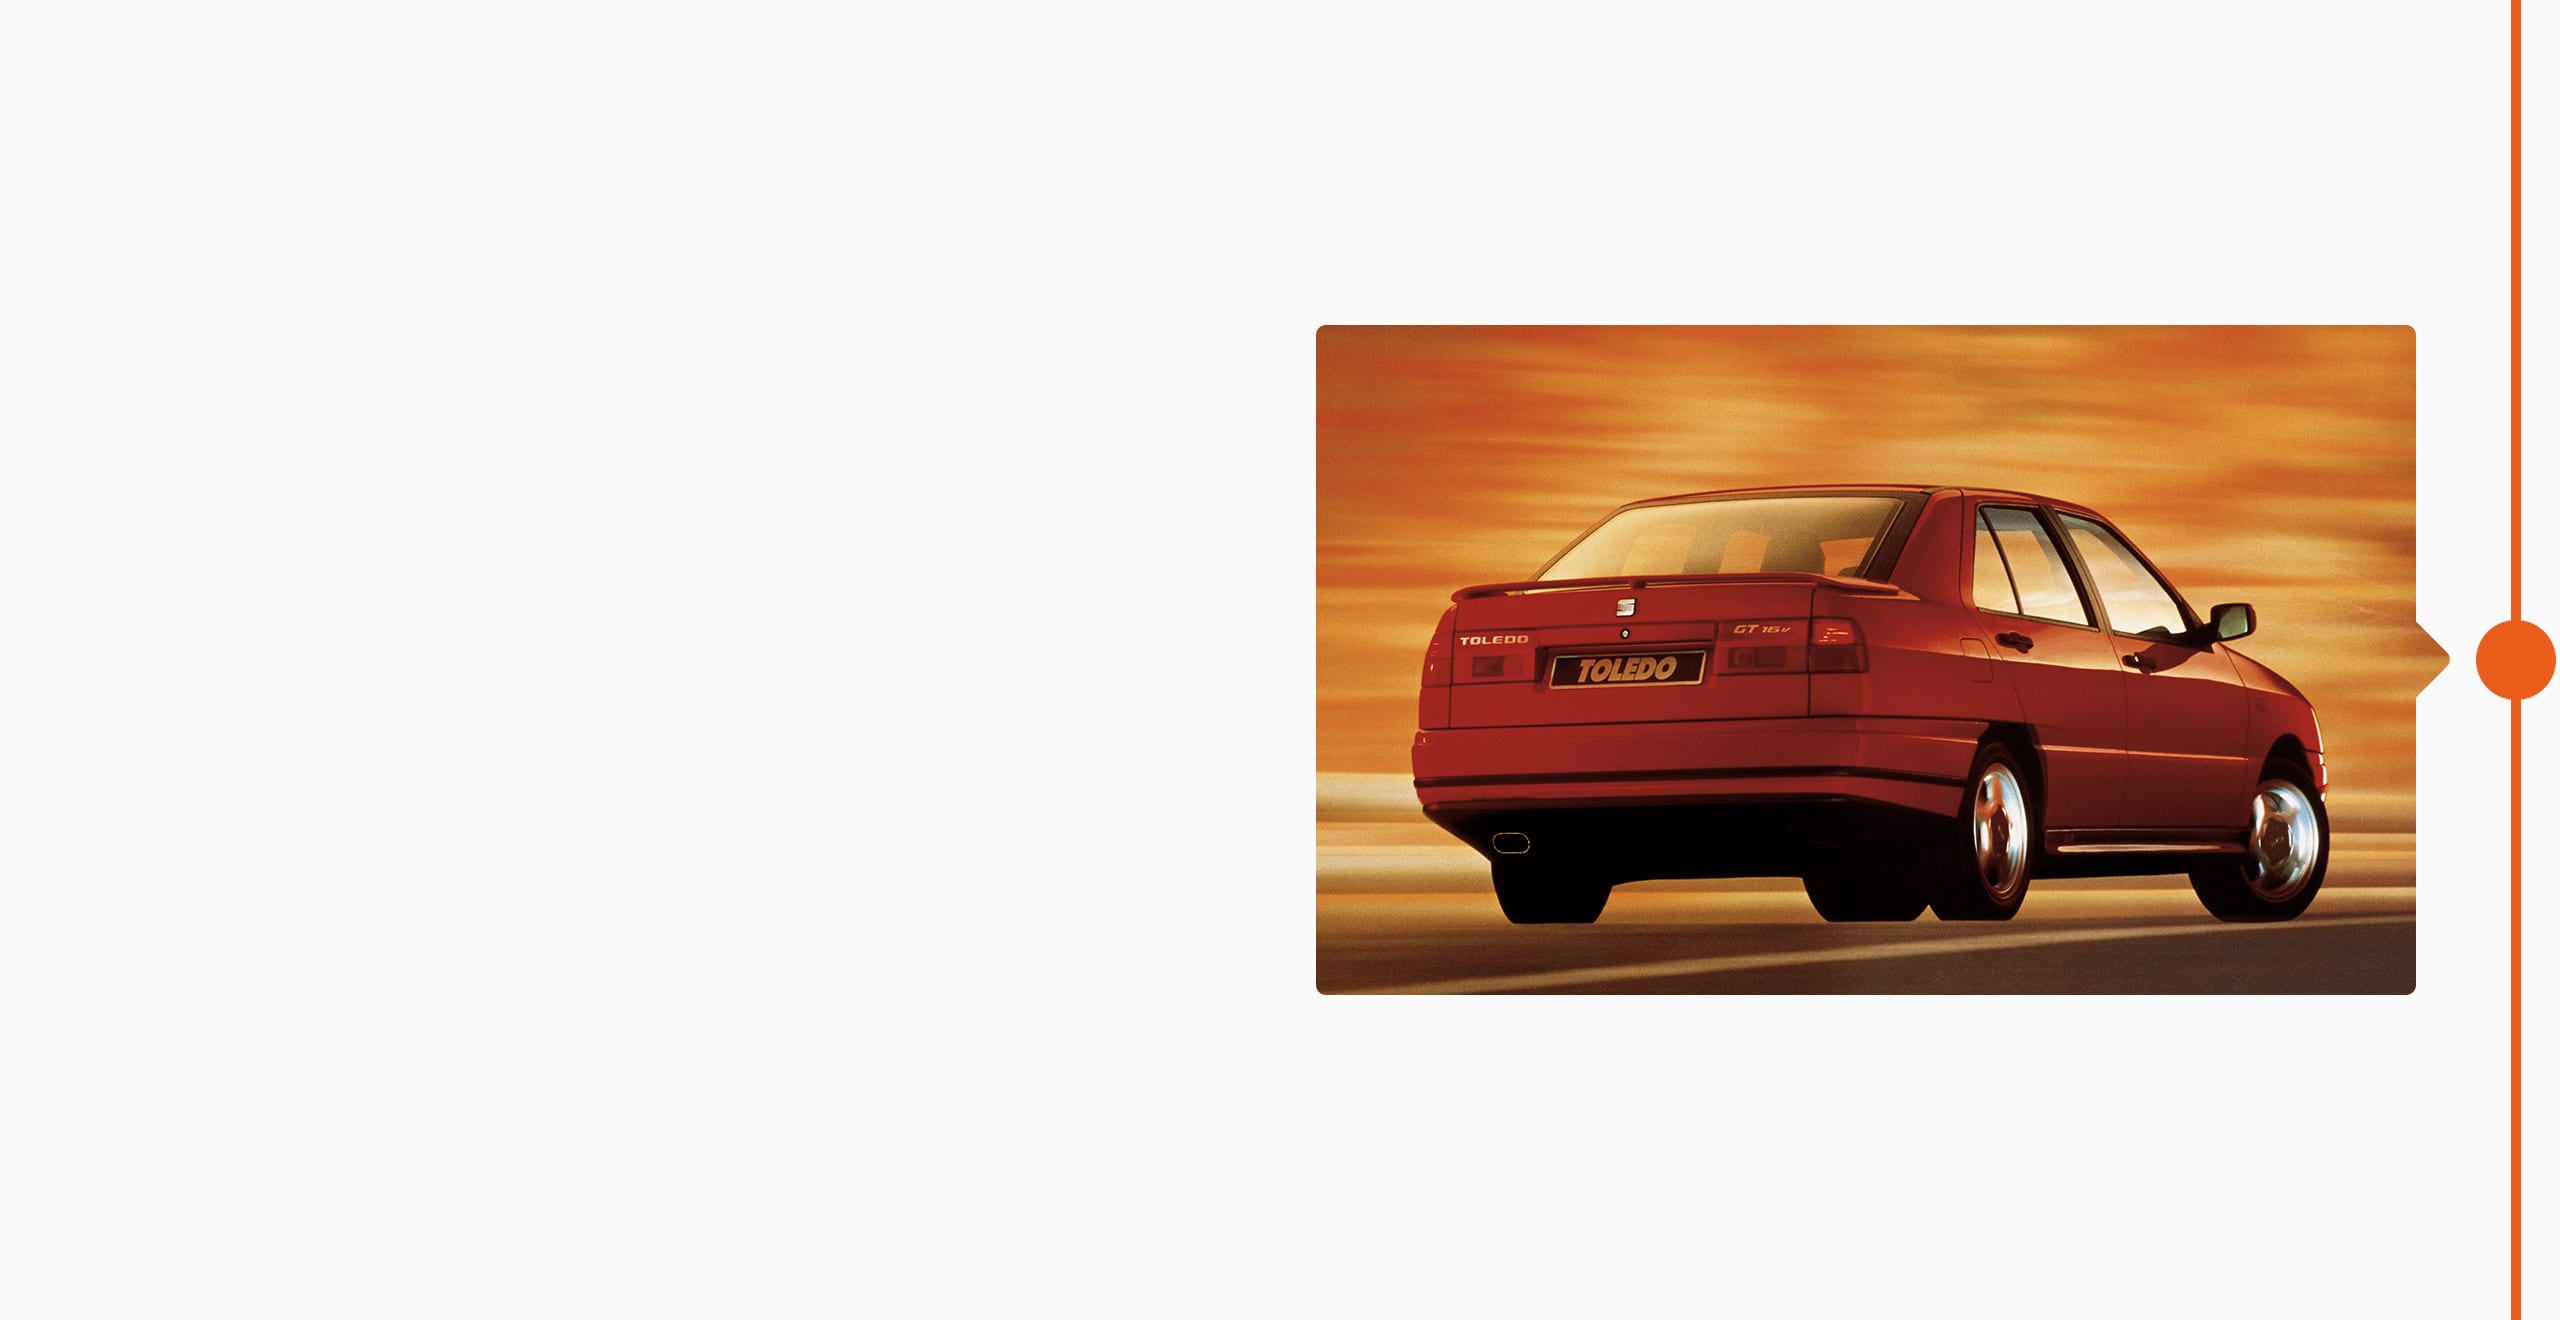 SEAT varumärke historia 1995 - Bil nummer 10 miljoner, en Toledo.